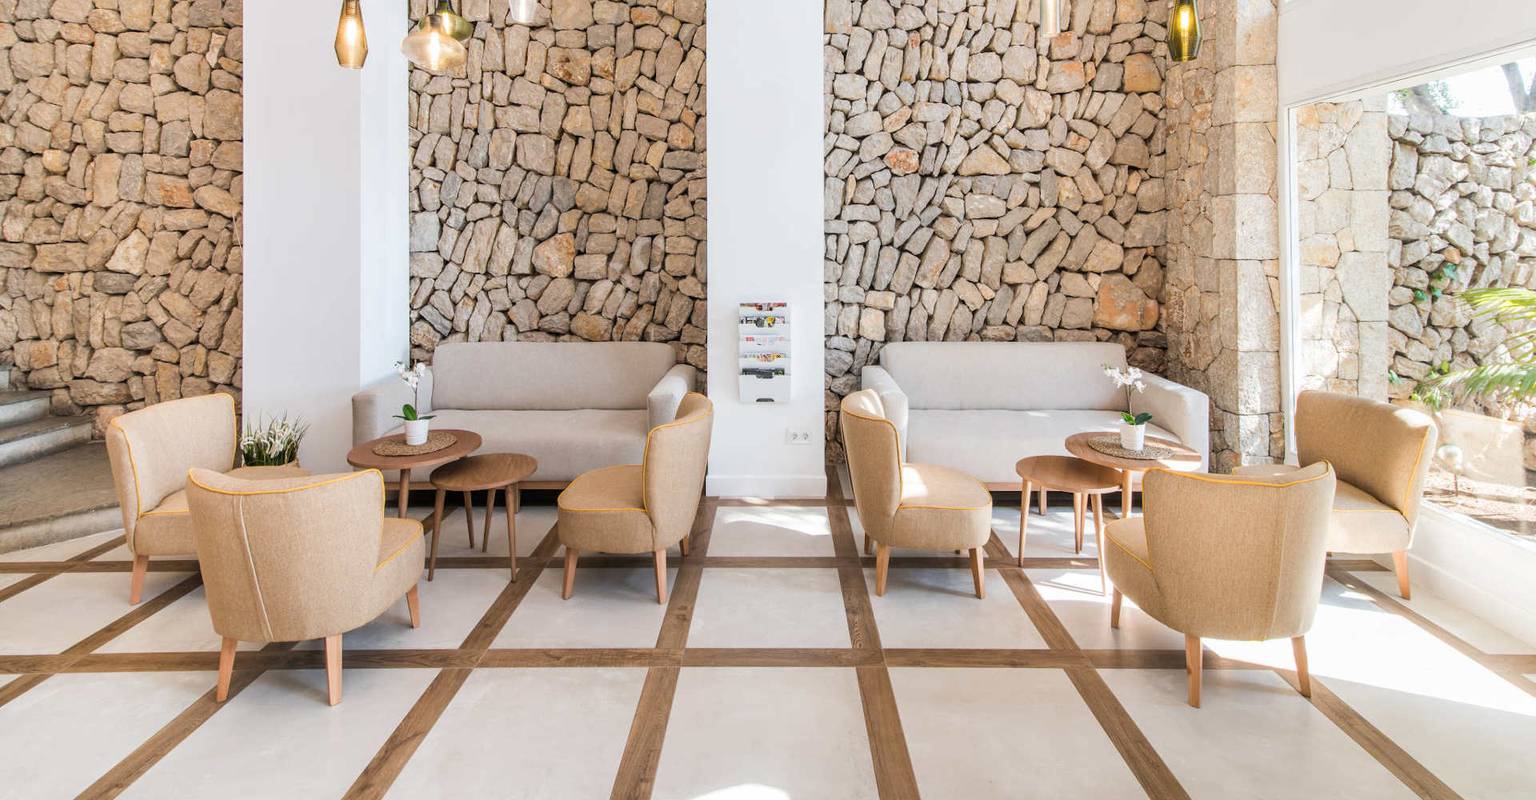 The details make the difference Hotel Na Taconera Font de Sa Cala, Mallorca